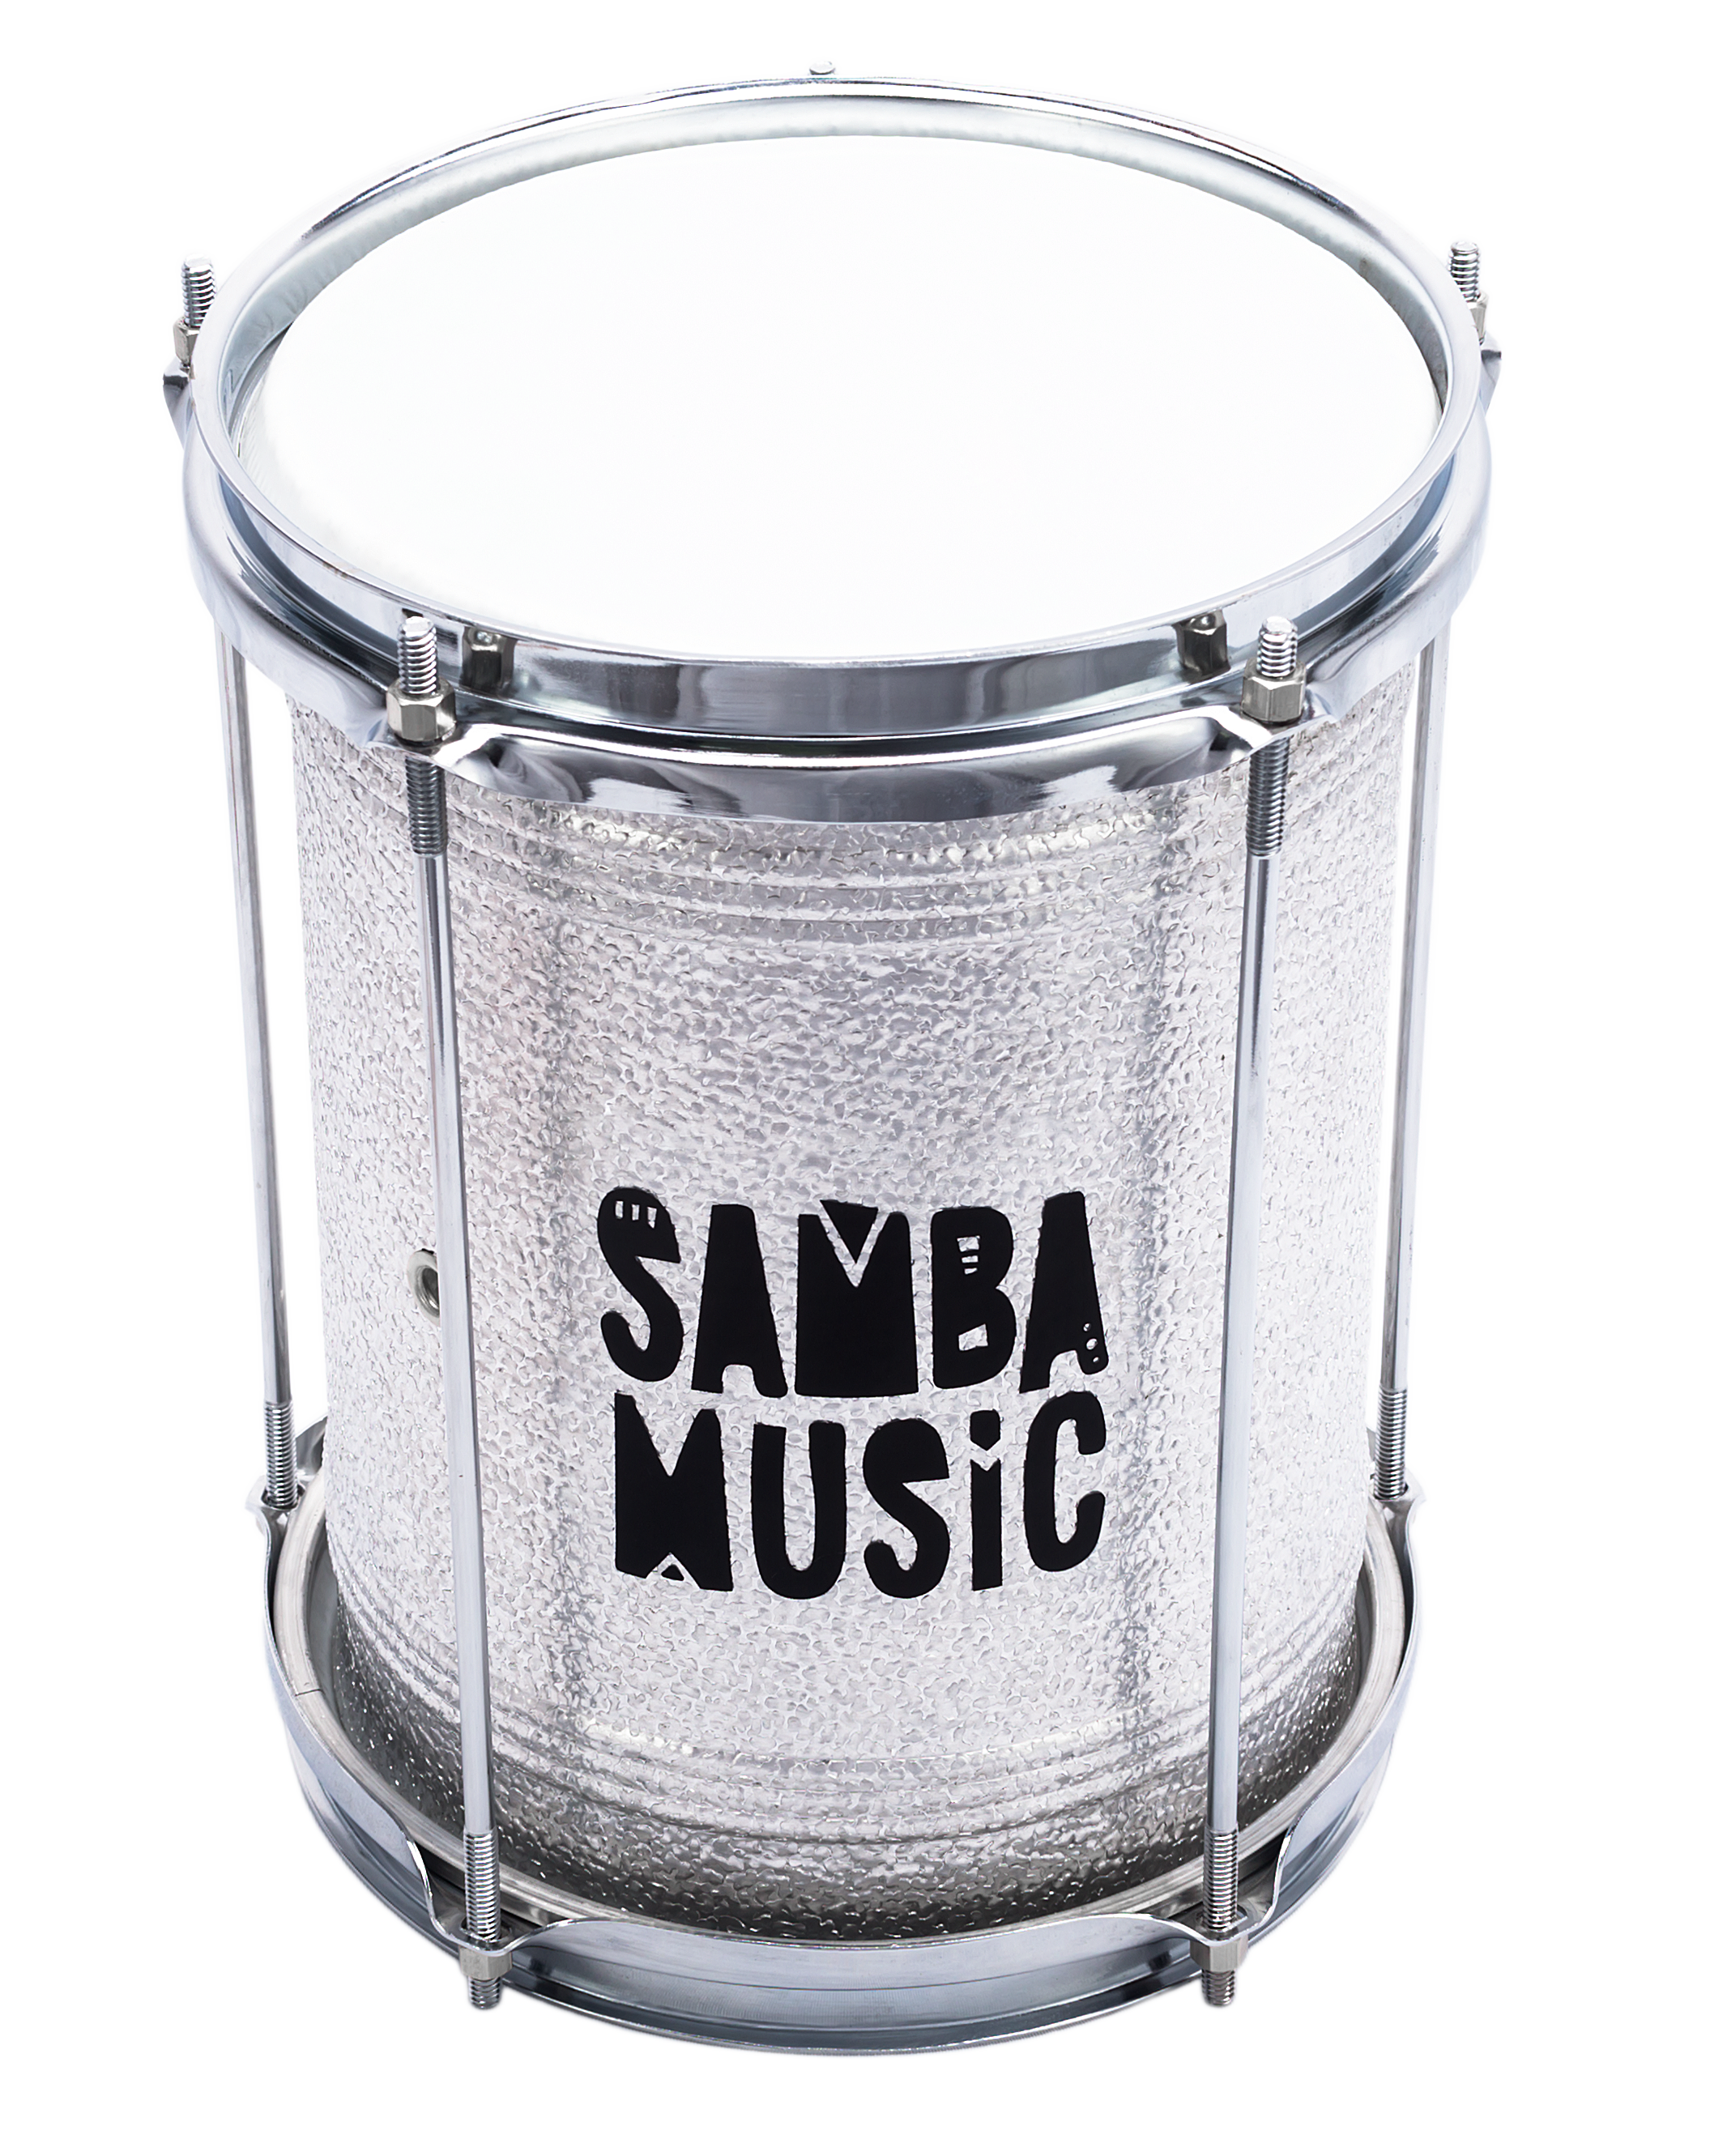 bacurinha samba music aluminio texturizado 207A